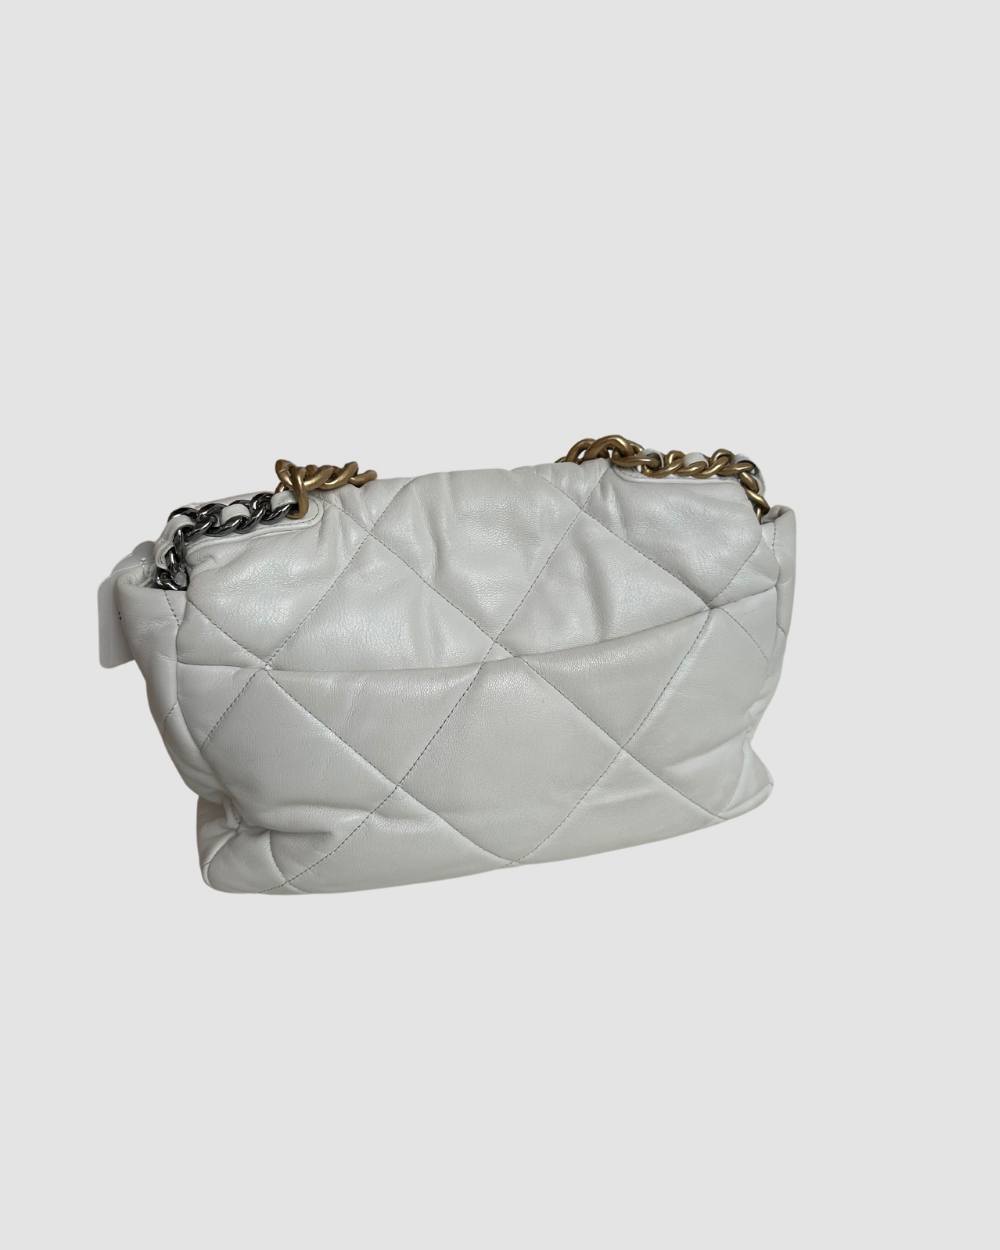 Chanel 2019 White Large Flap Bag